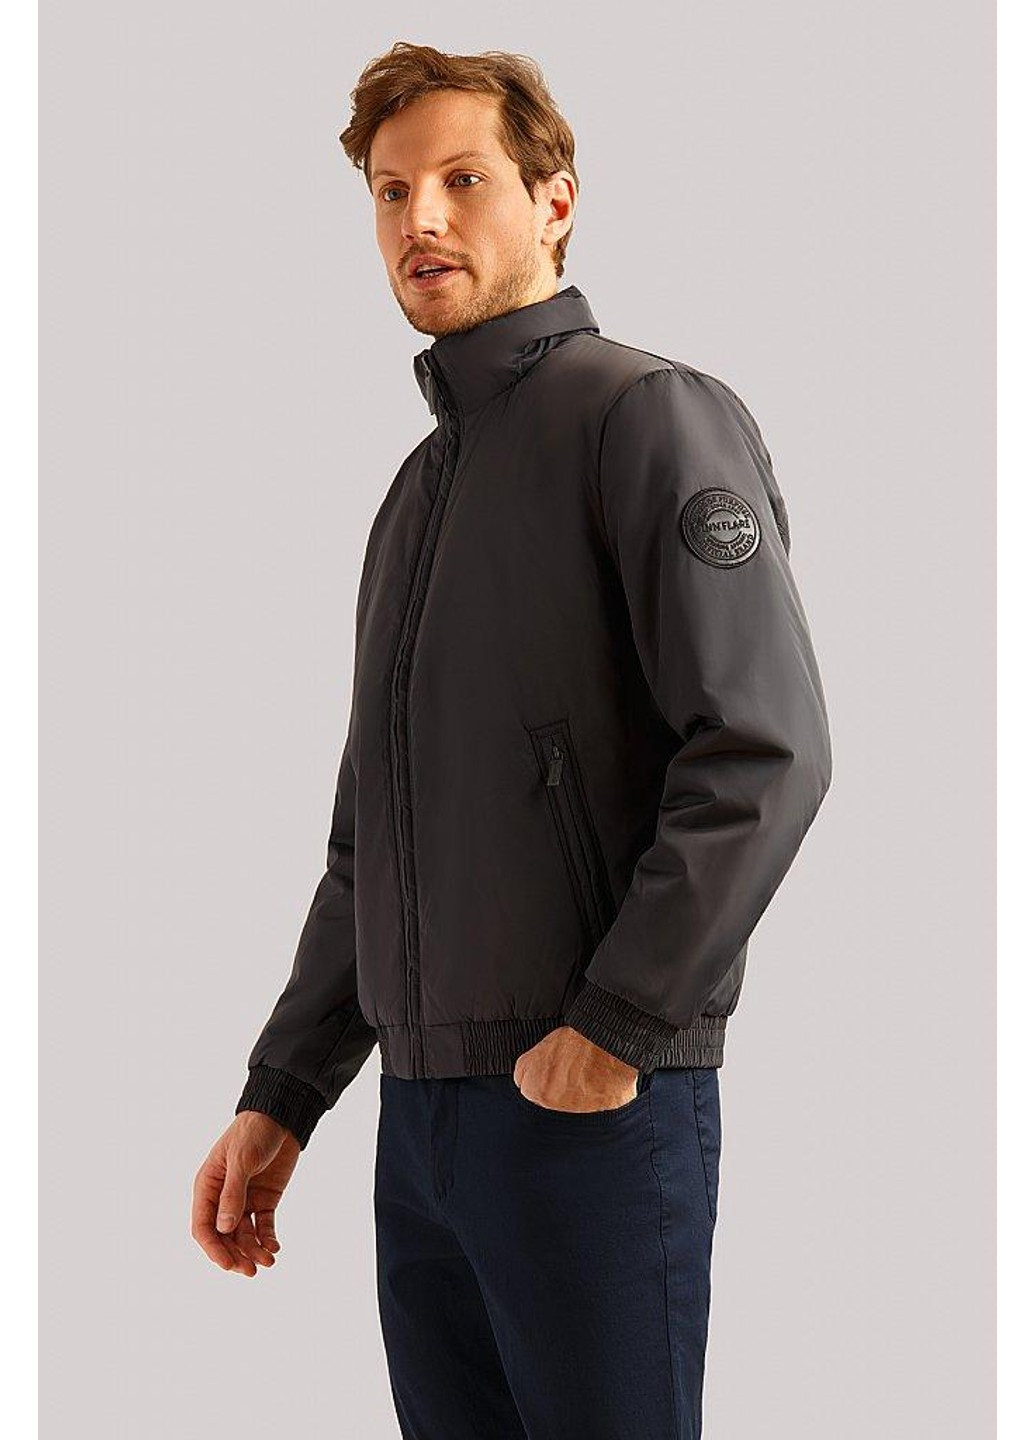 Серая демисезонная куртка b19-22000-202 Finn Flare